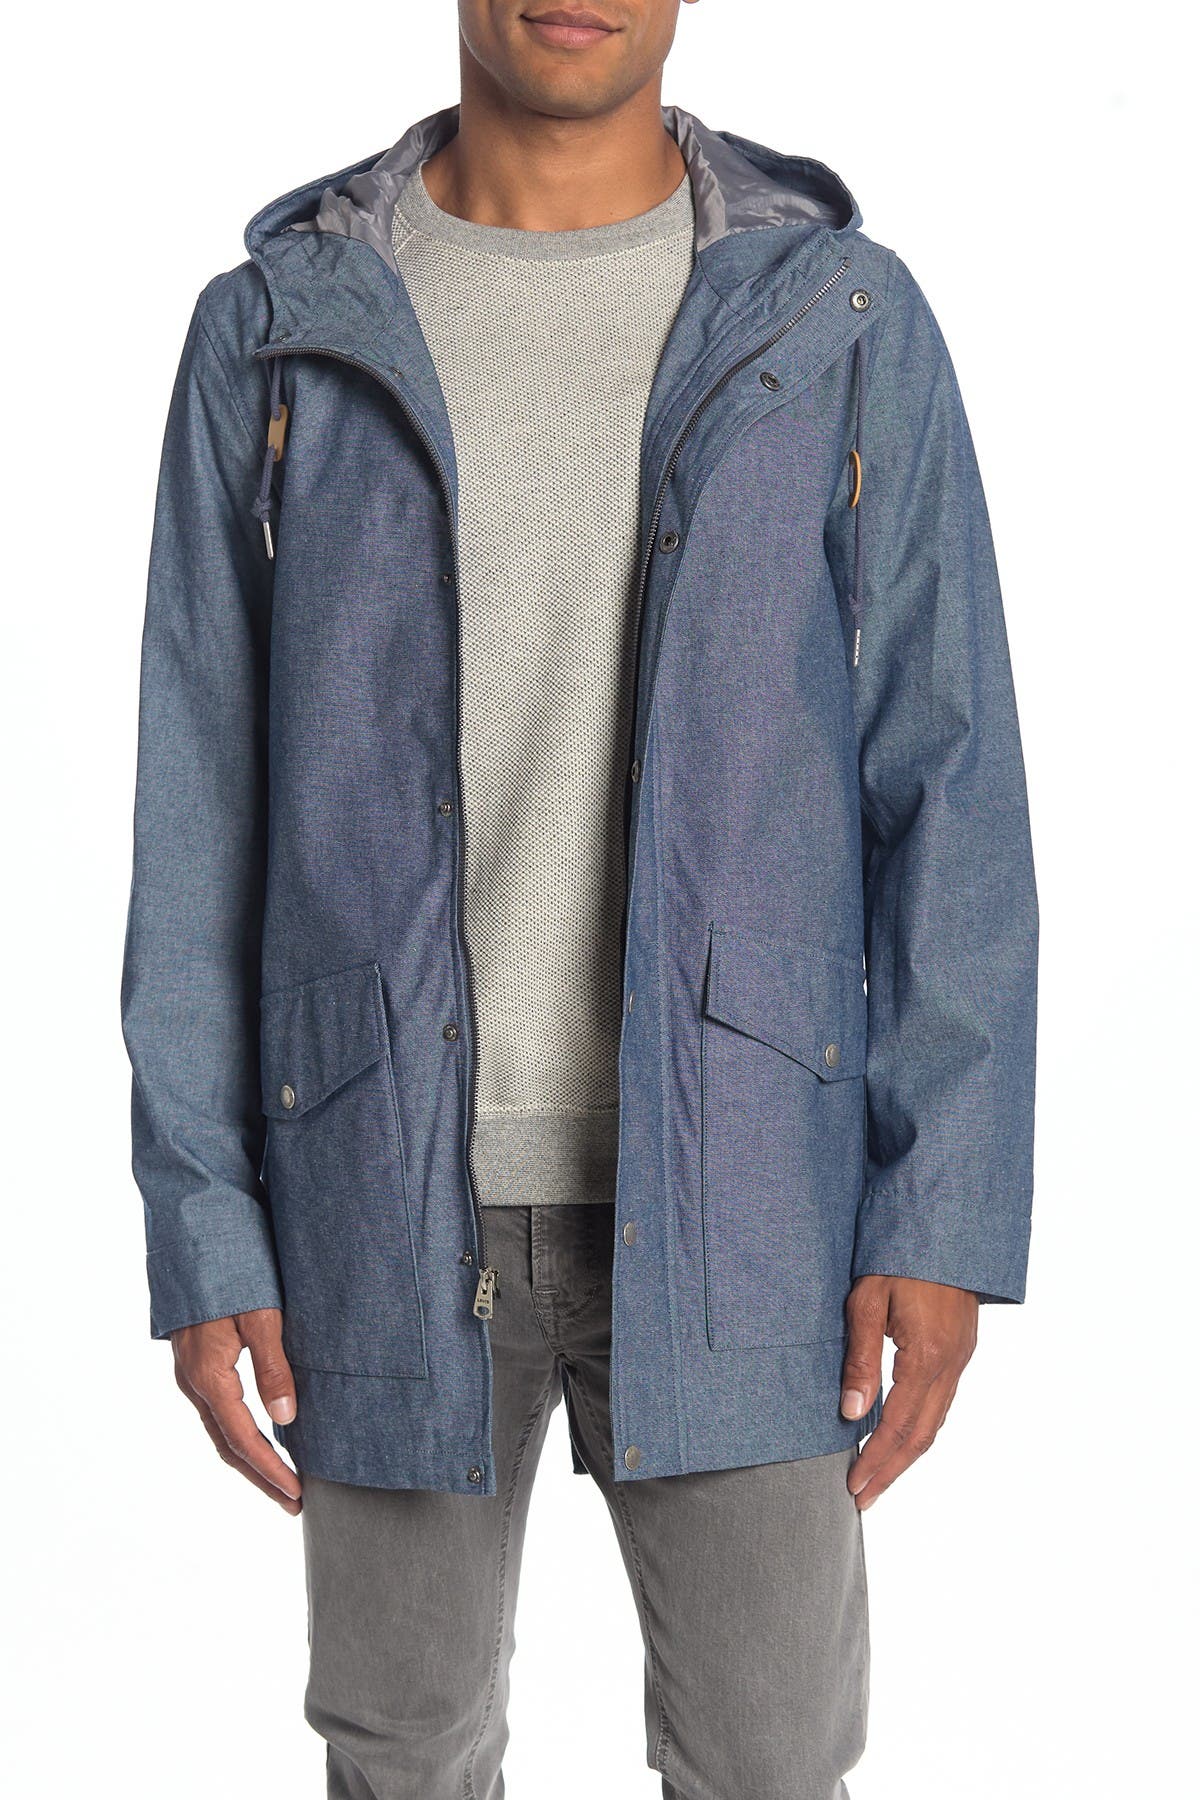 levi's fishtail parka jacket